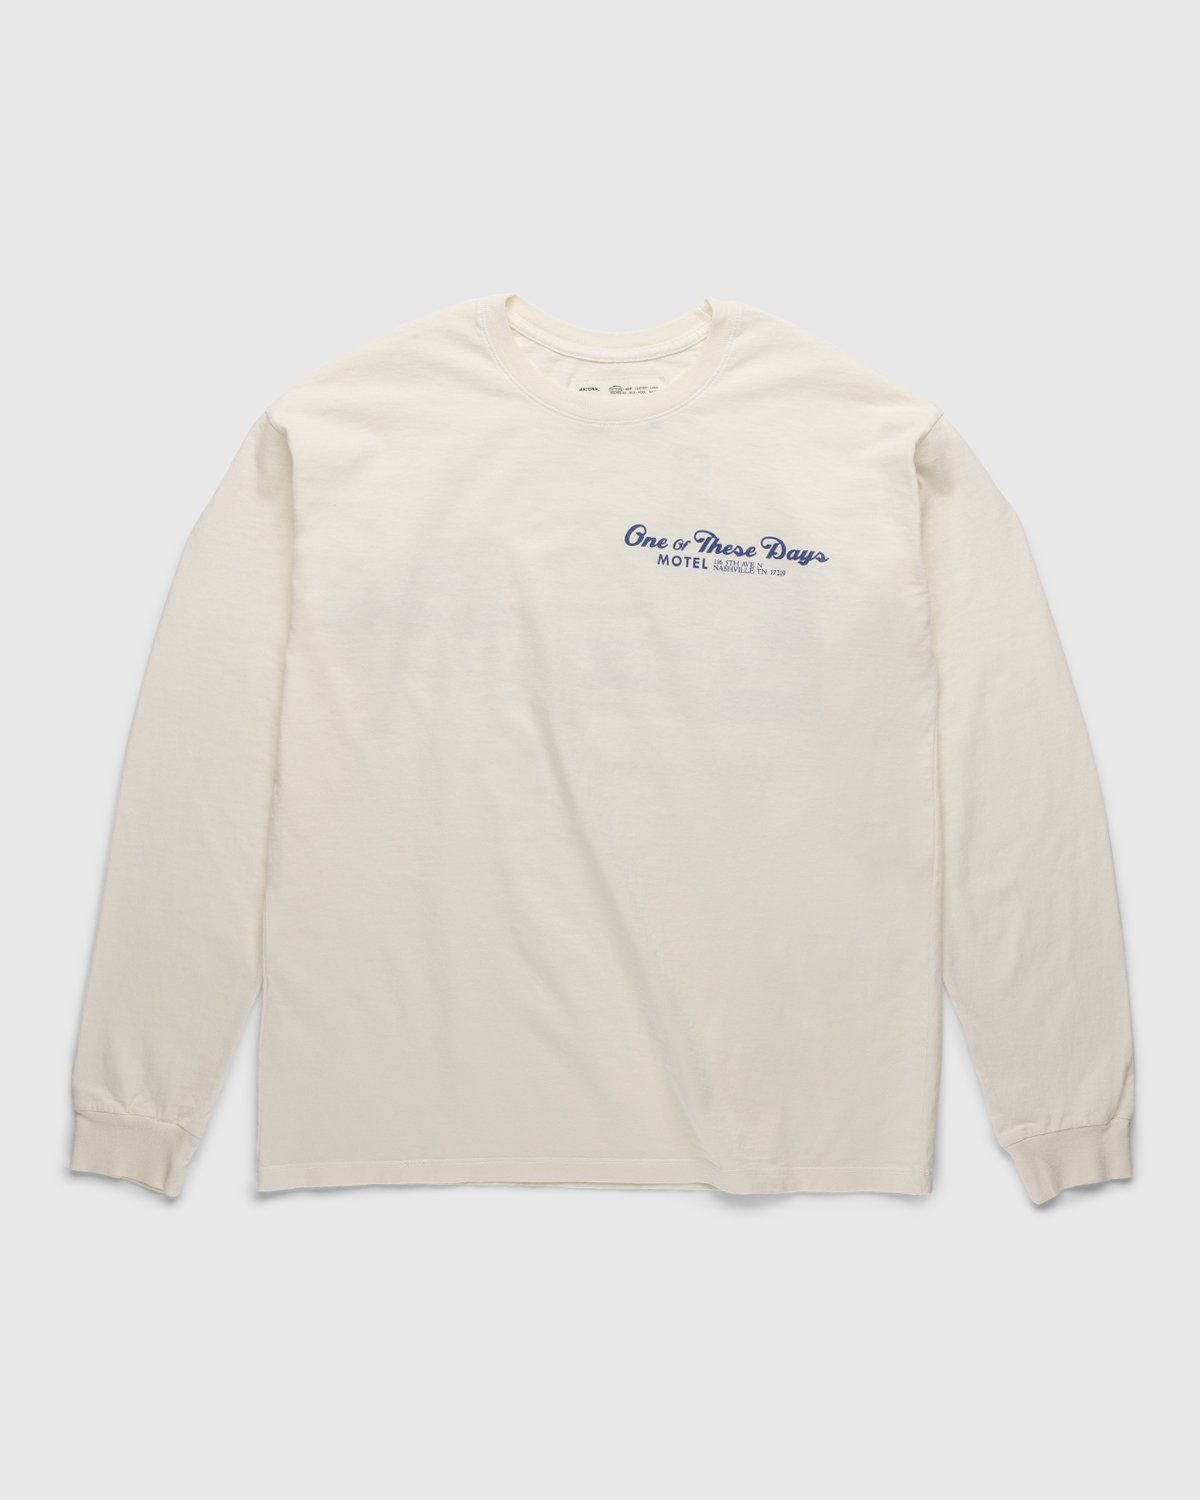 Matt McCormick x Highsnobiety – Motel Long Sleeve - T-shirts - Beige - Image 2